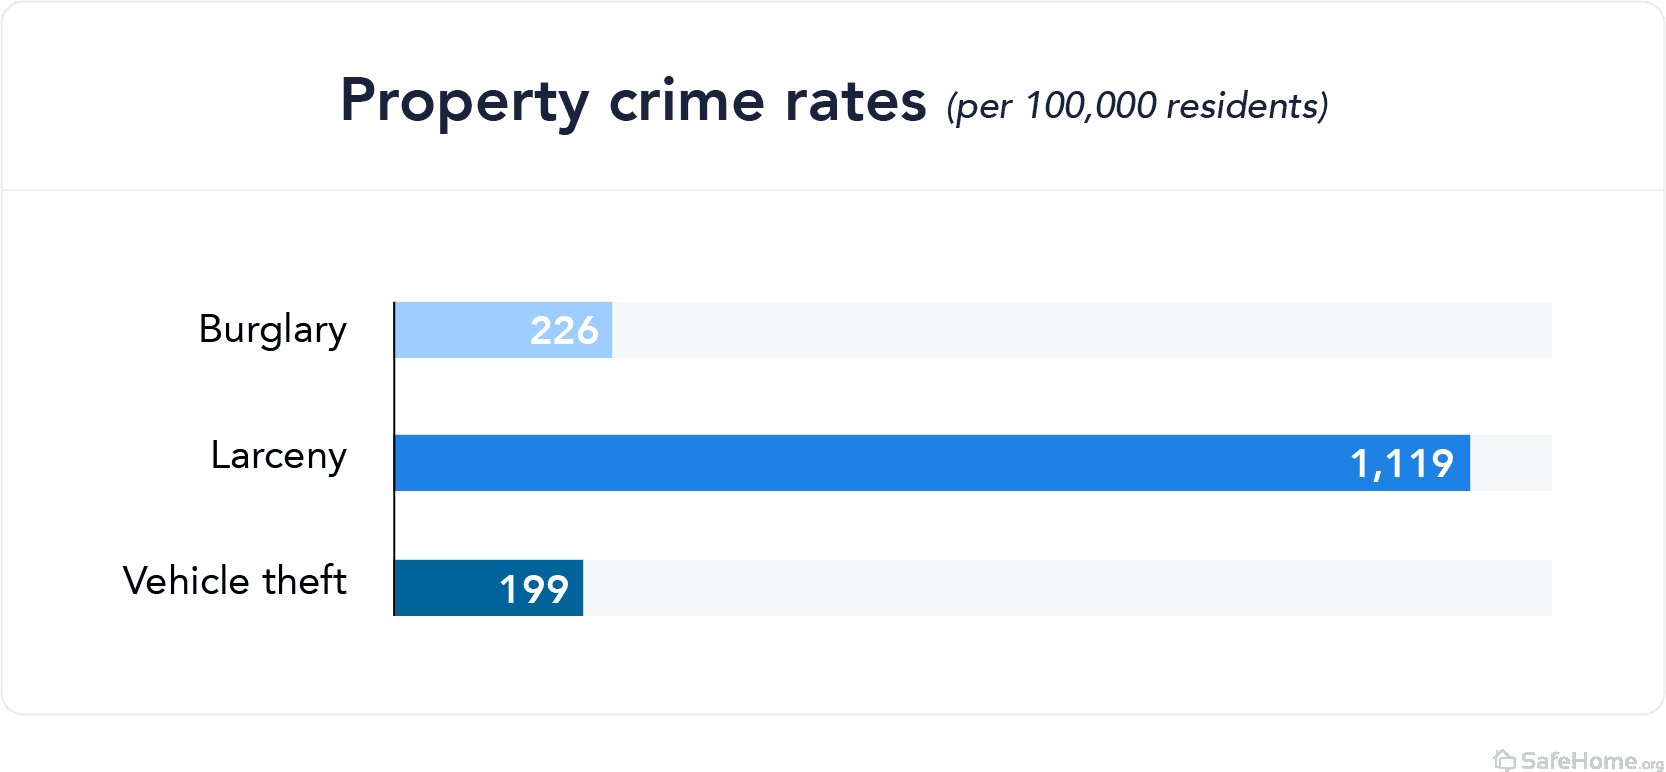 Indiana property crime rates